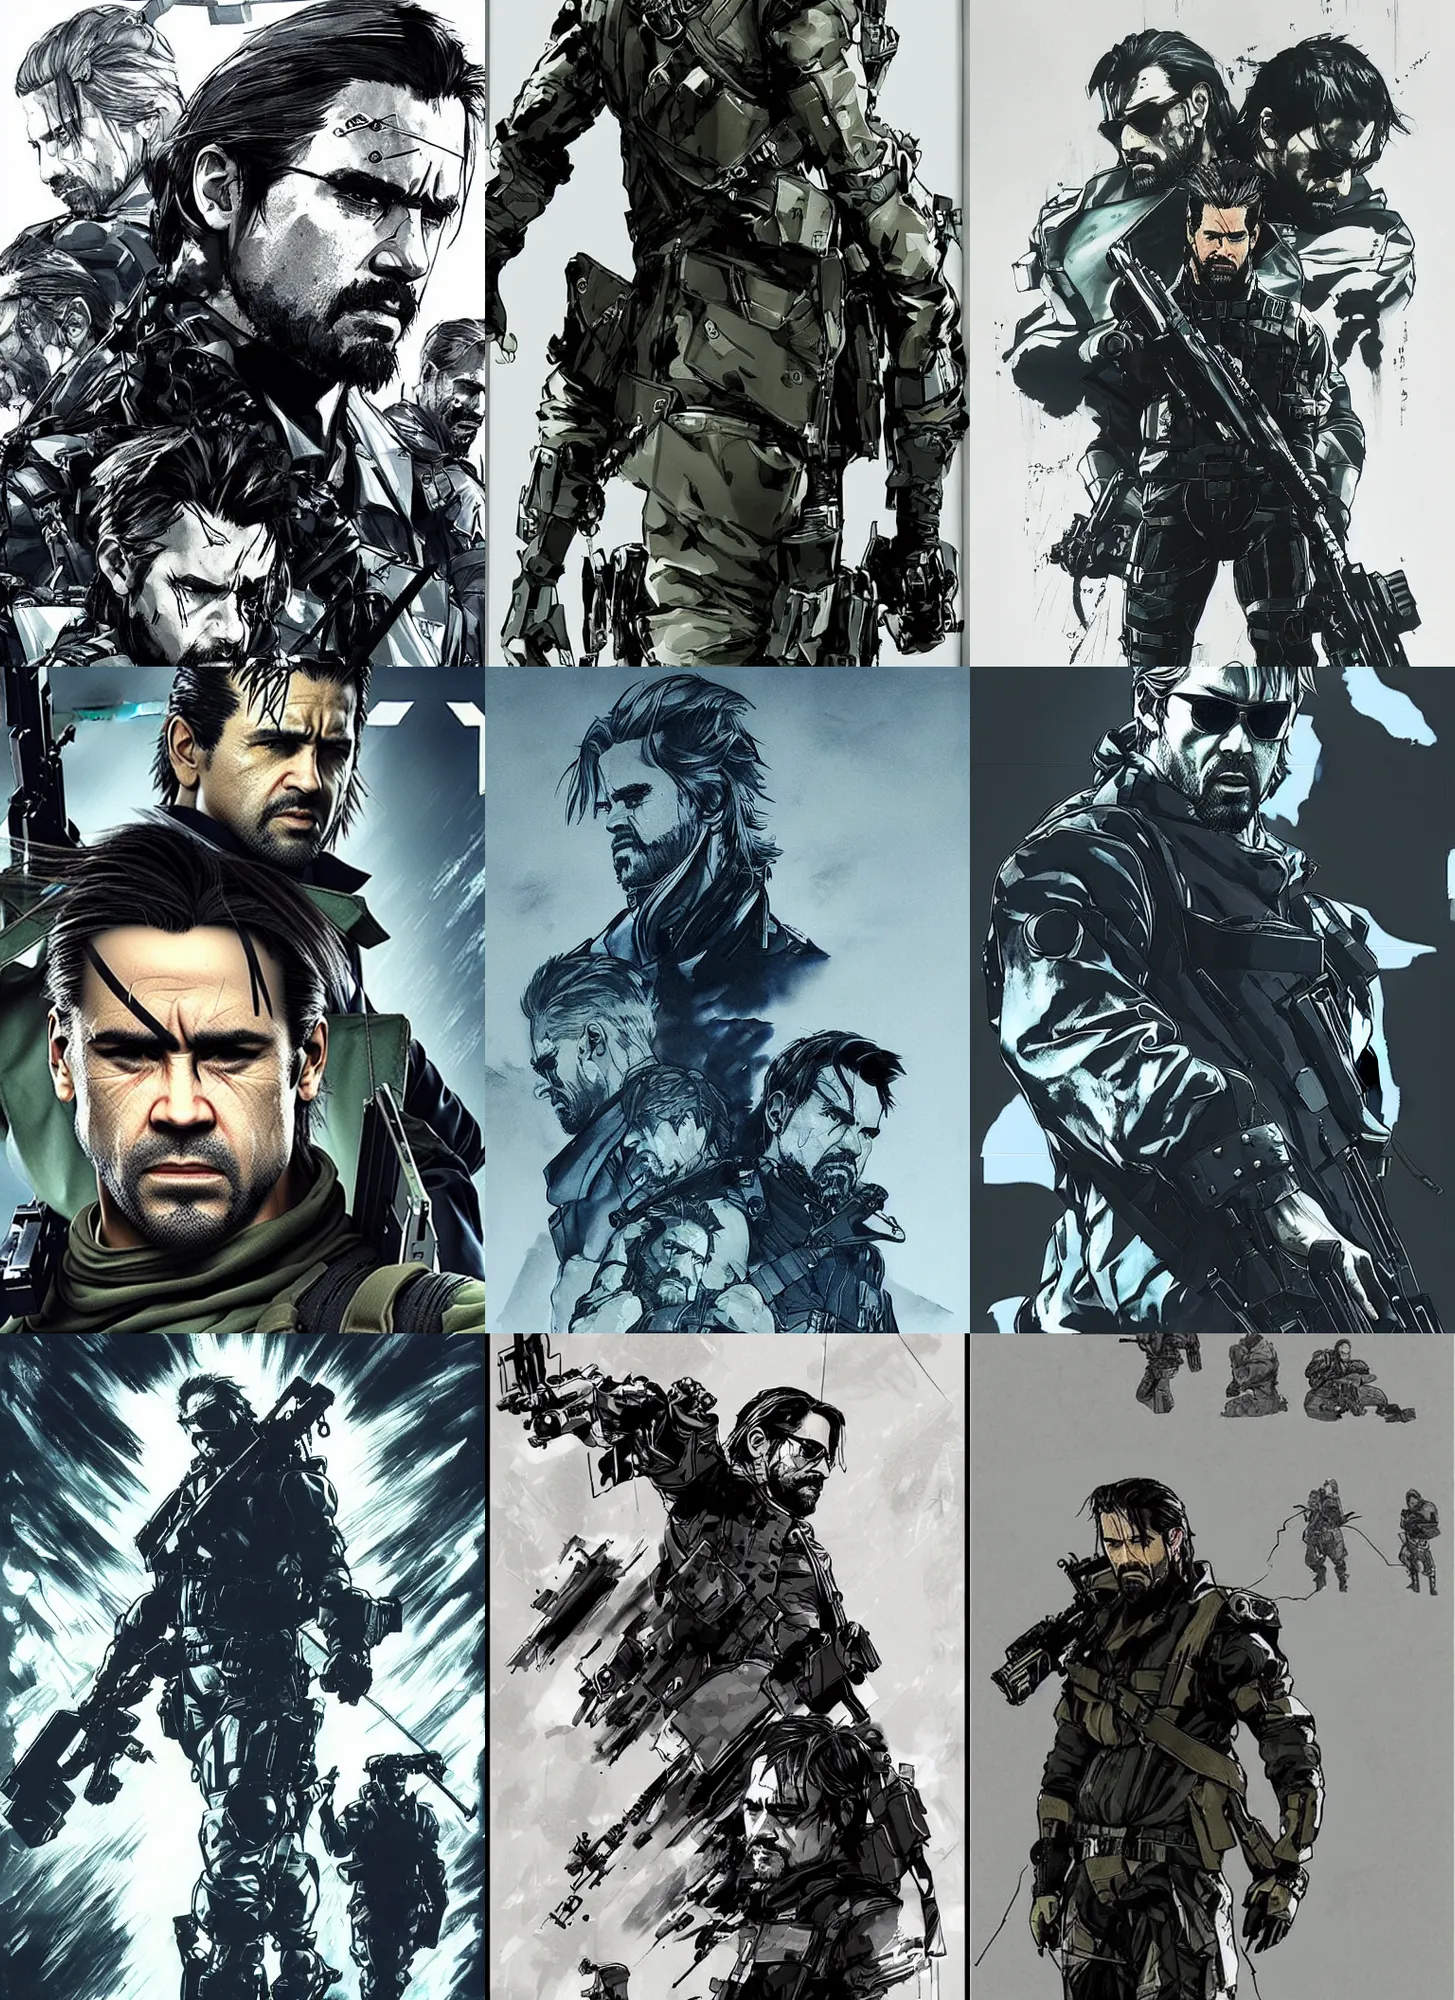 Prompt: Style of Yoji Shinkawa Colin Farrell as Metal Gear Solid, Death Stranding concept